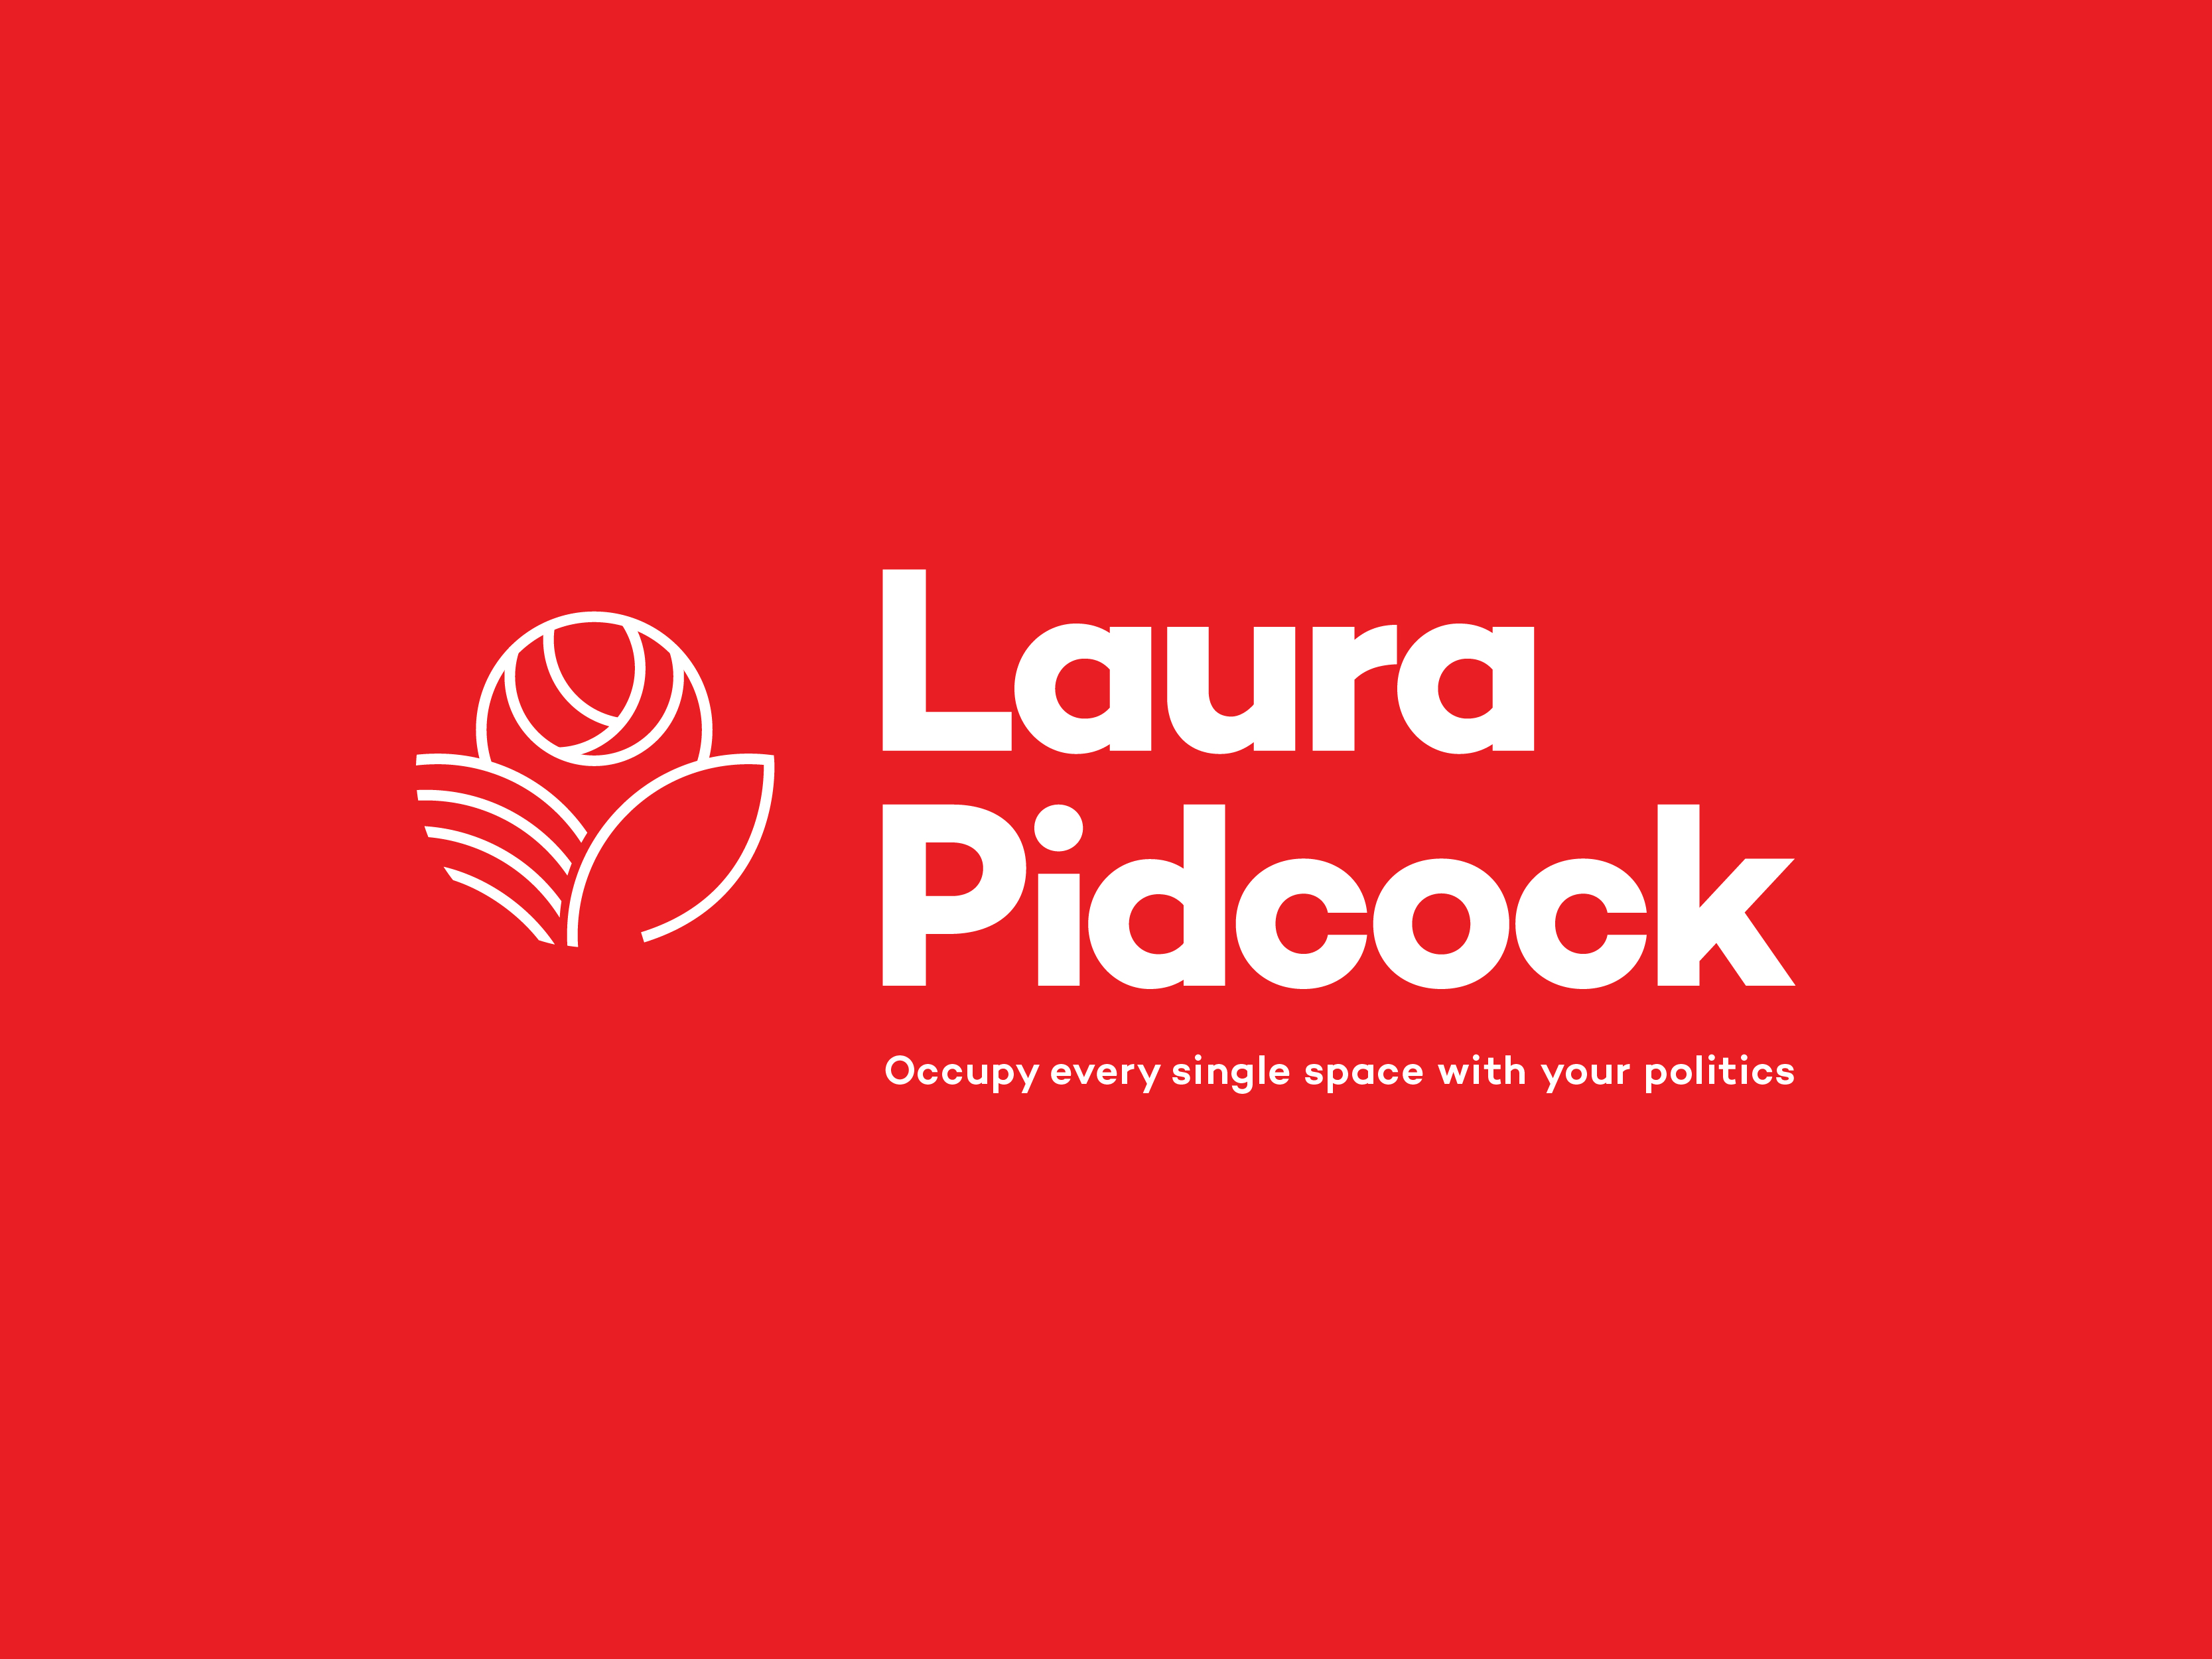 Laura Pidcock's former Labour MP Logo.